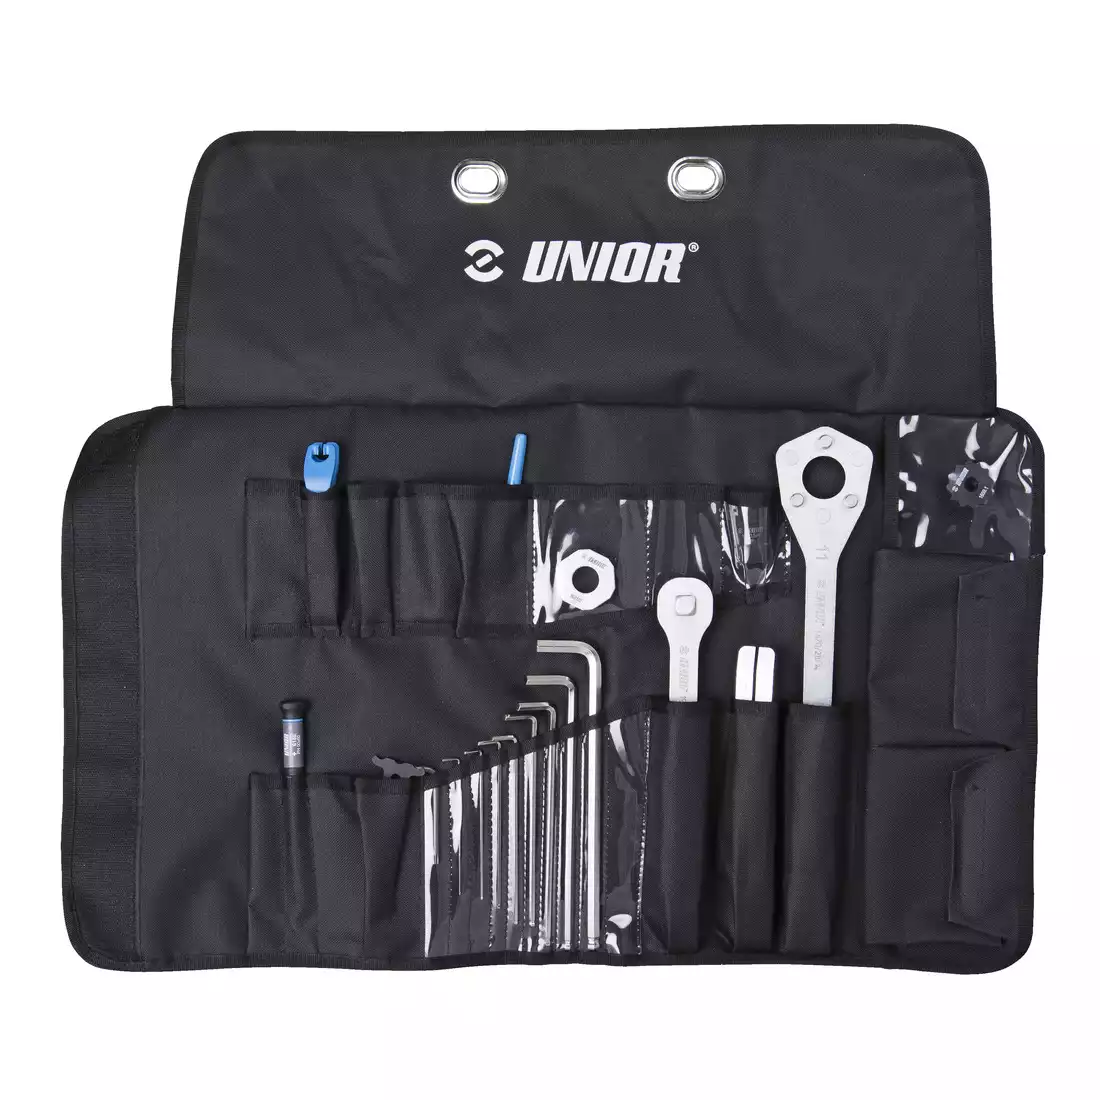 UNIOR WRAP PRO set of bicycle tools